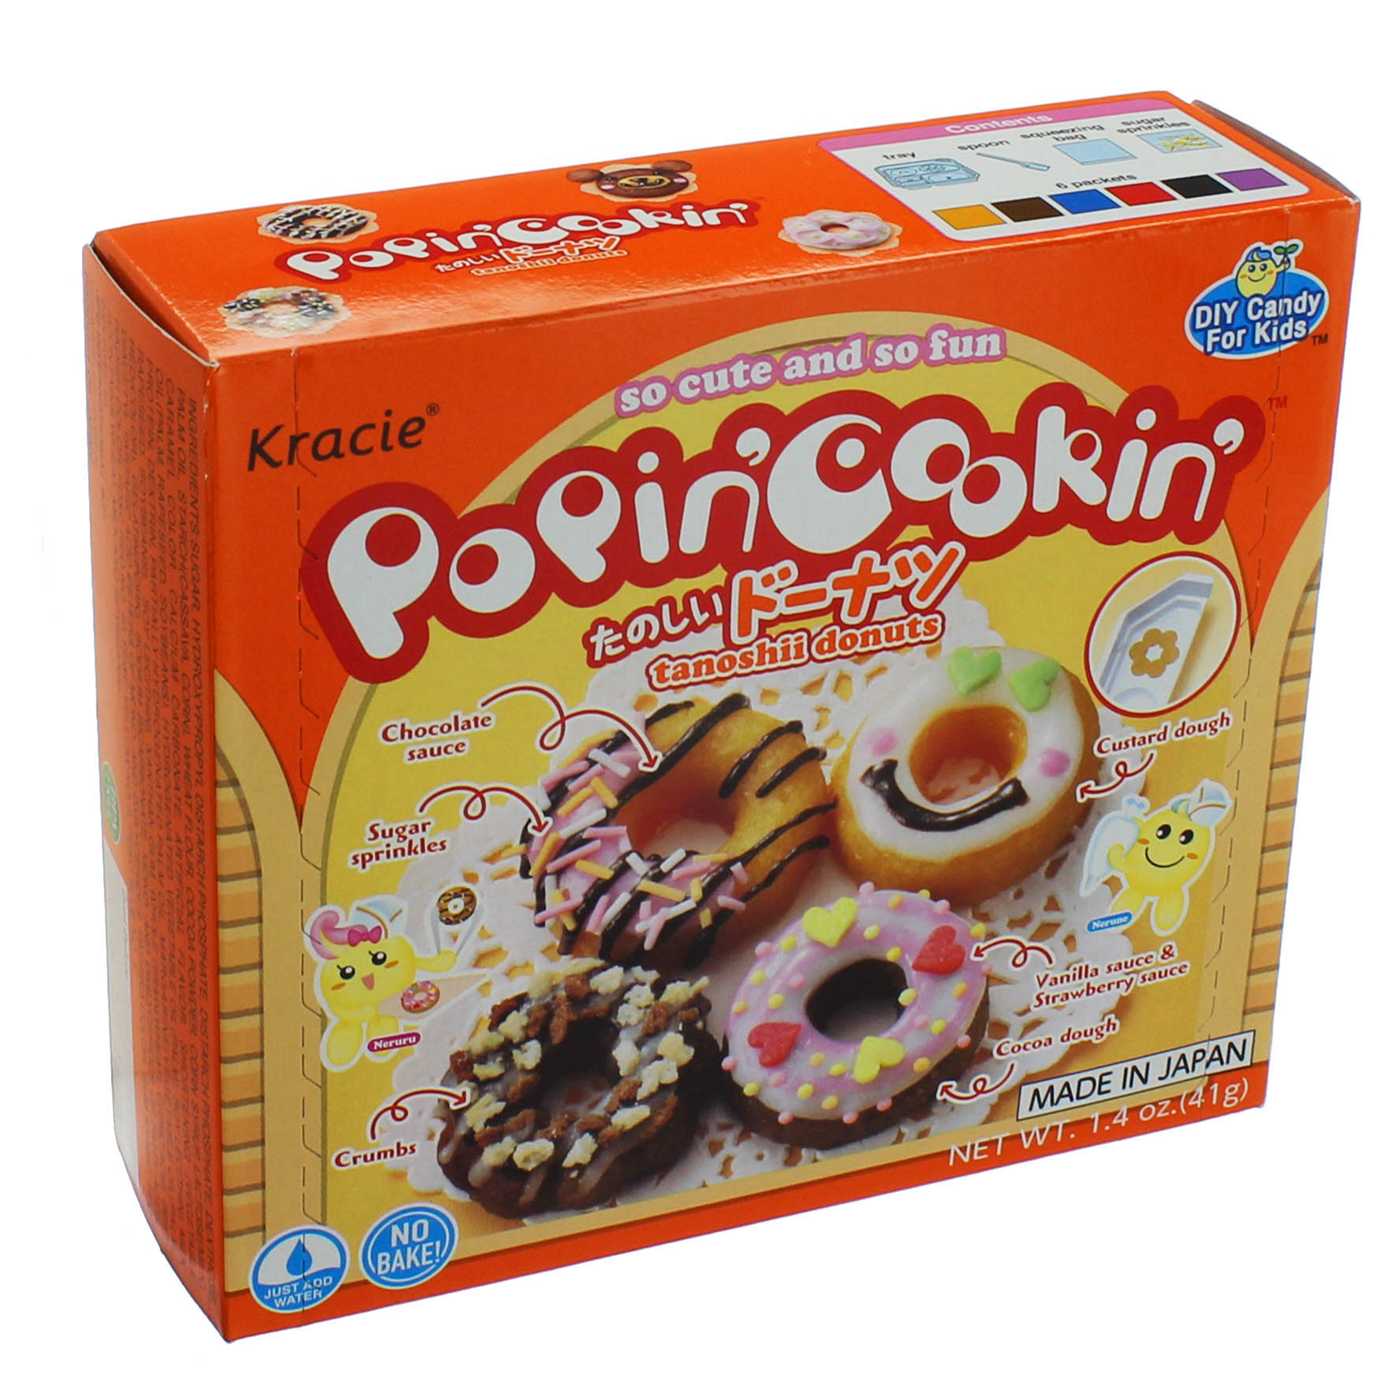 Kracie Popin'Cookin' Tanoshii Donuts - Shop Candy at H-E-B